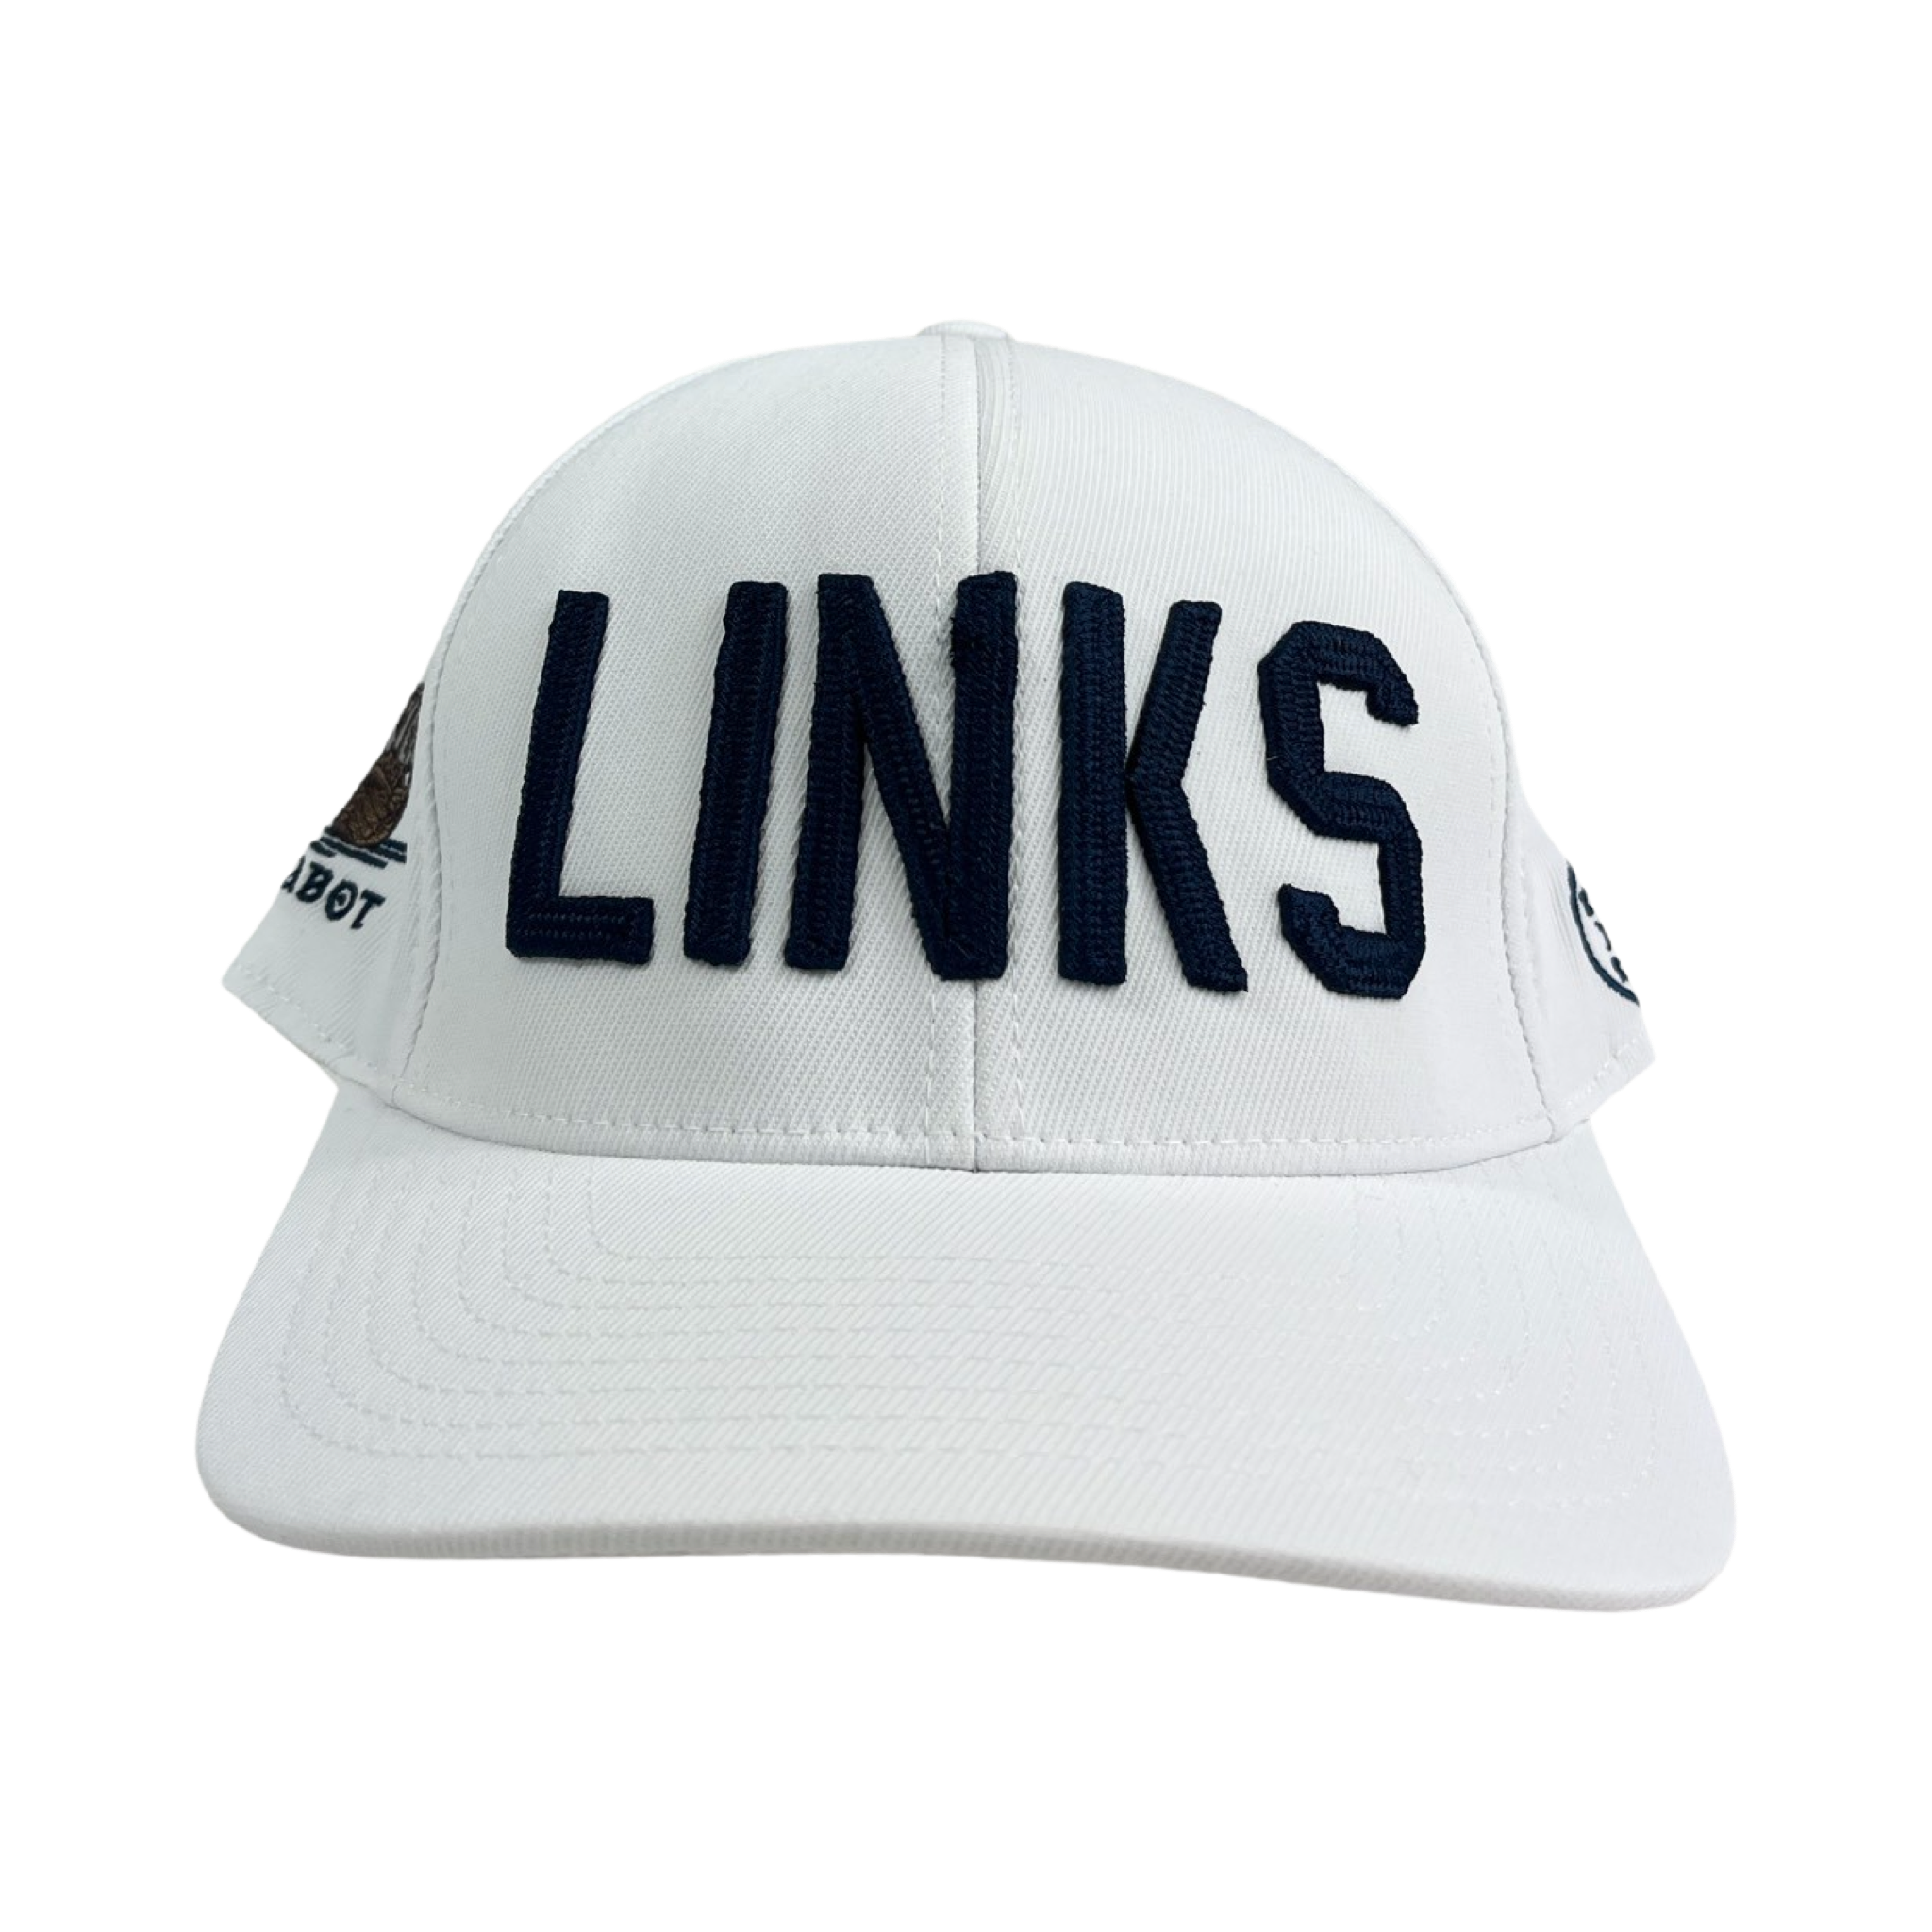 G/FORE Custom LINKS Quick Turn Hat – Cabot Cape Breton